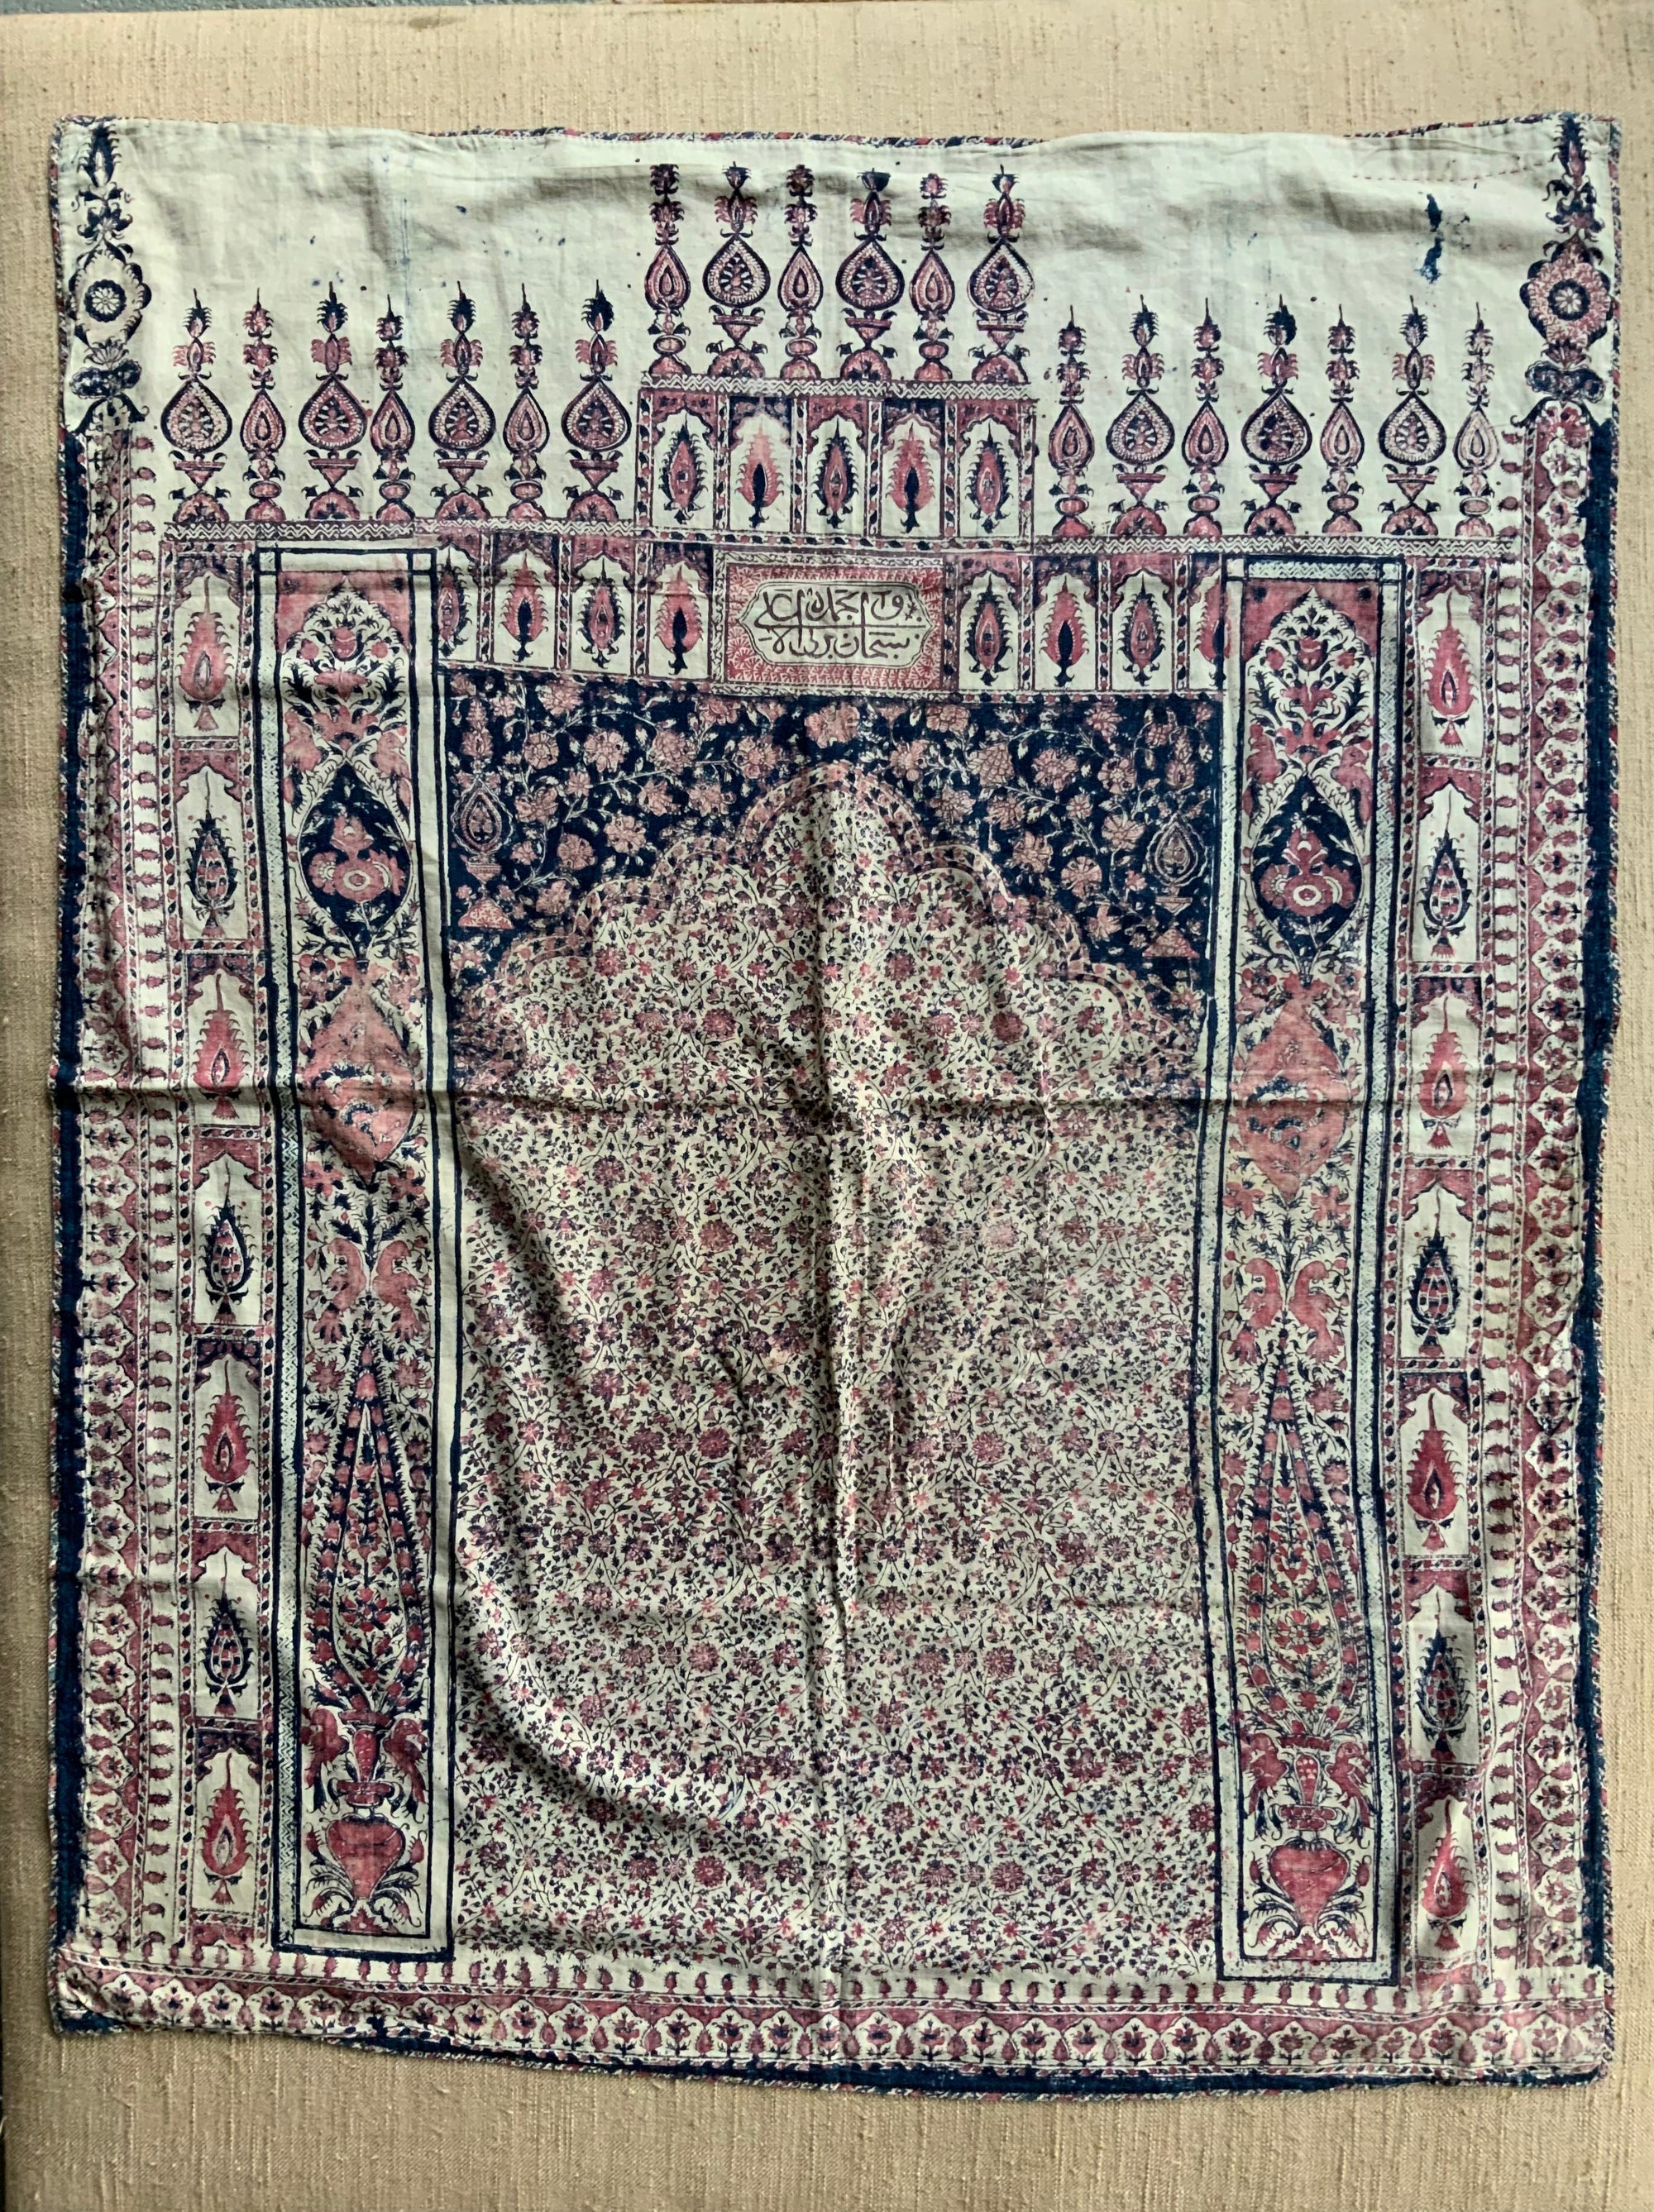 Palampore Kalmkari antique cotton print (101 x 82cm)